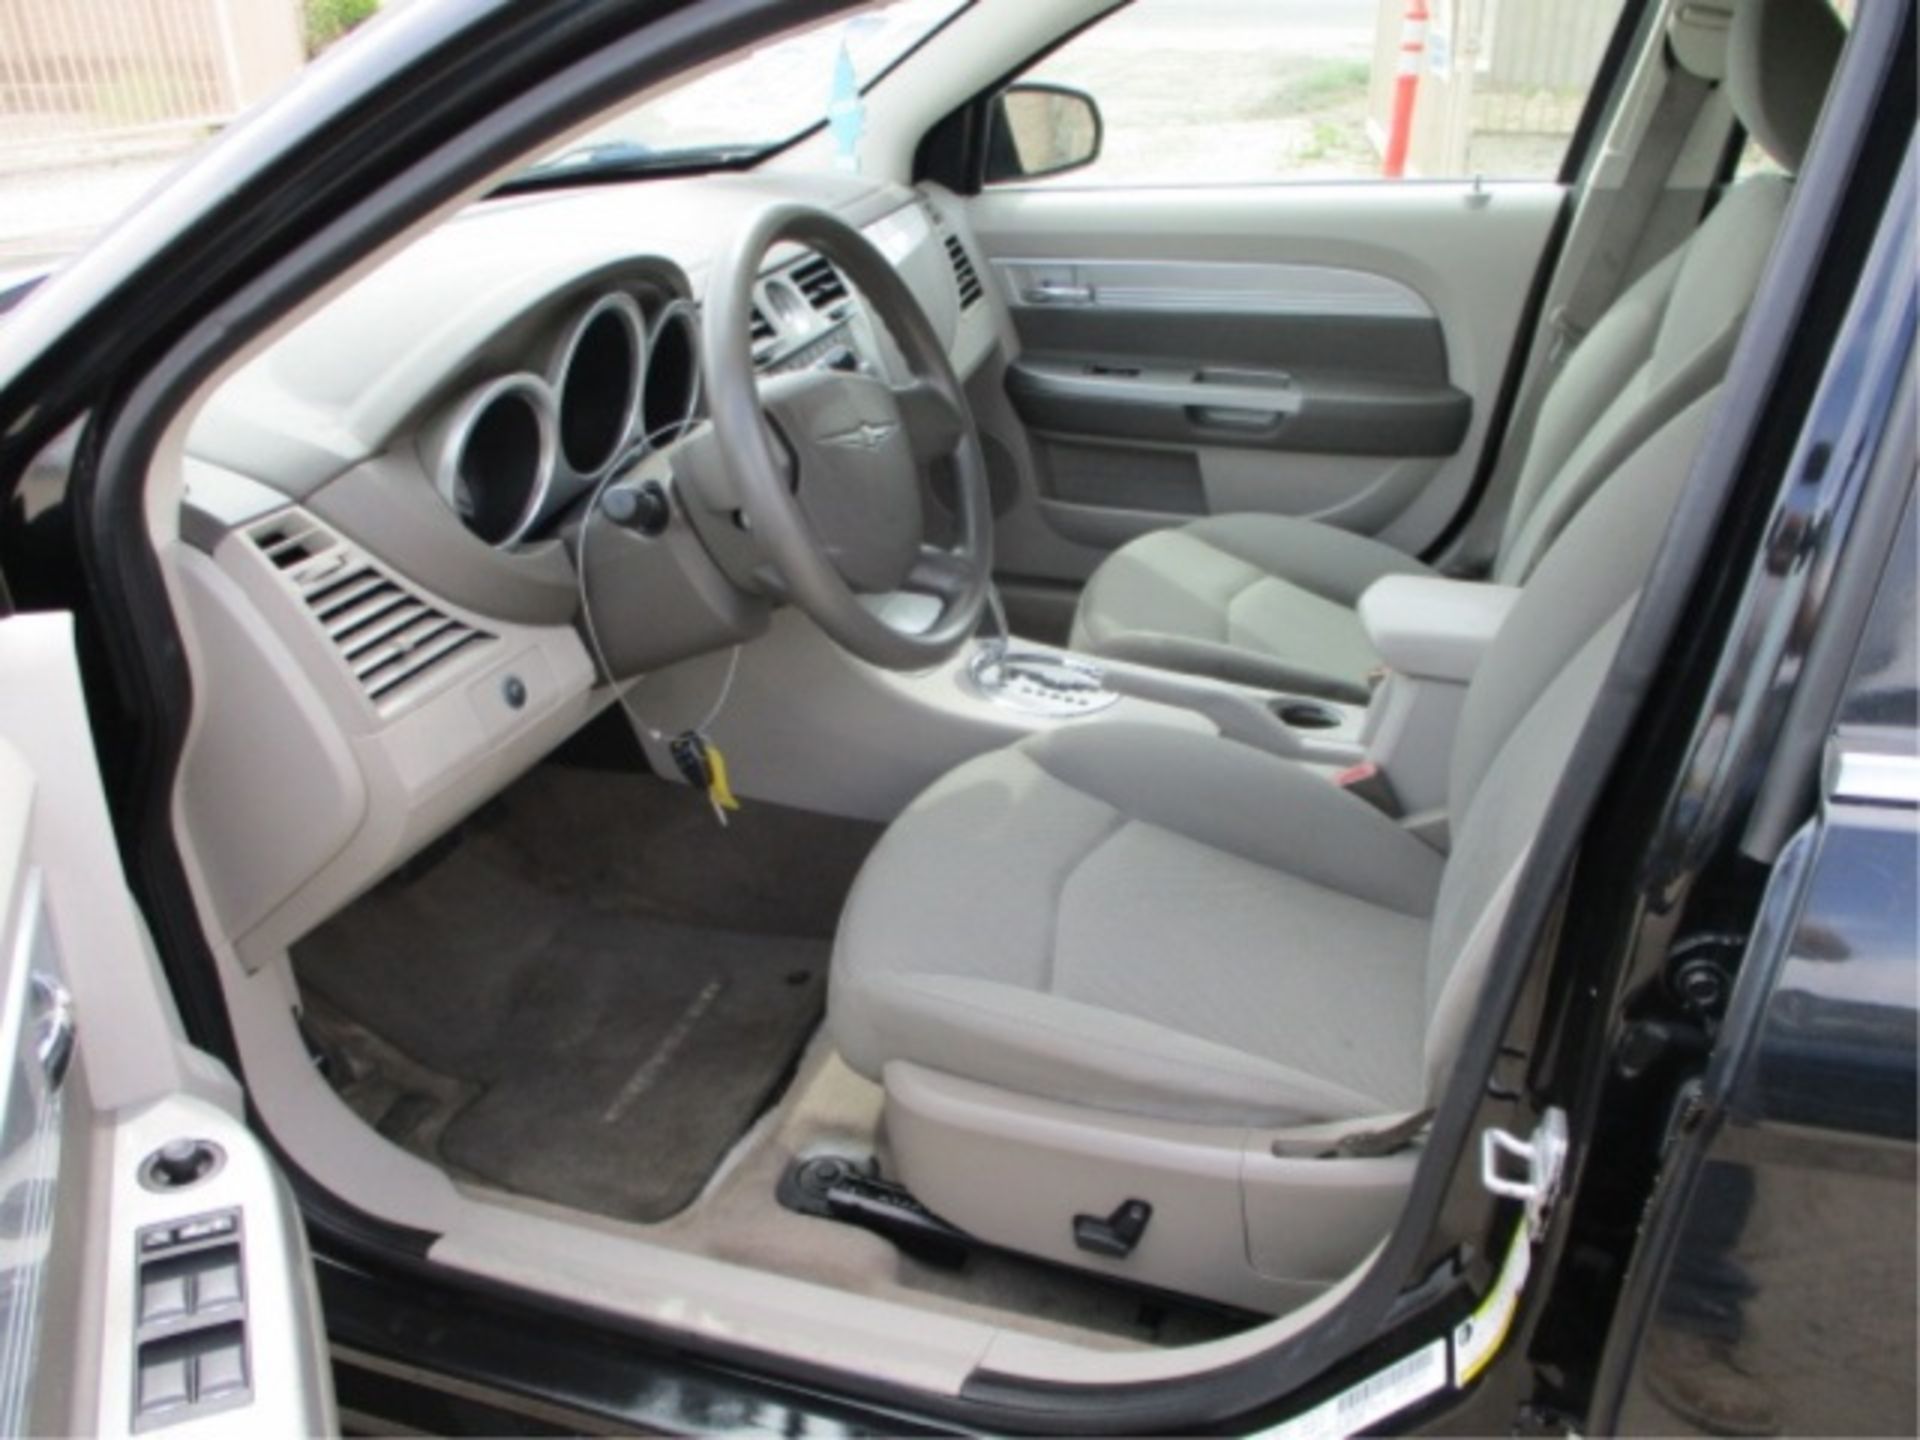 2007 Chrysler Sebring Sedan, 2.7L V6 Gas, Automatic, S/N: 1C3LC56R17N524072, Miles/Hours - 137410 - Image 9 of 22